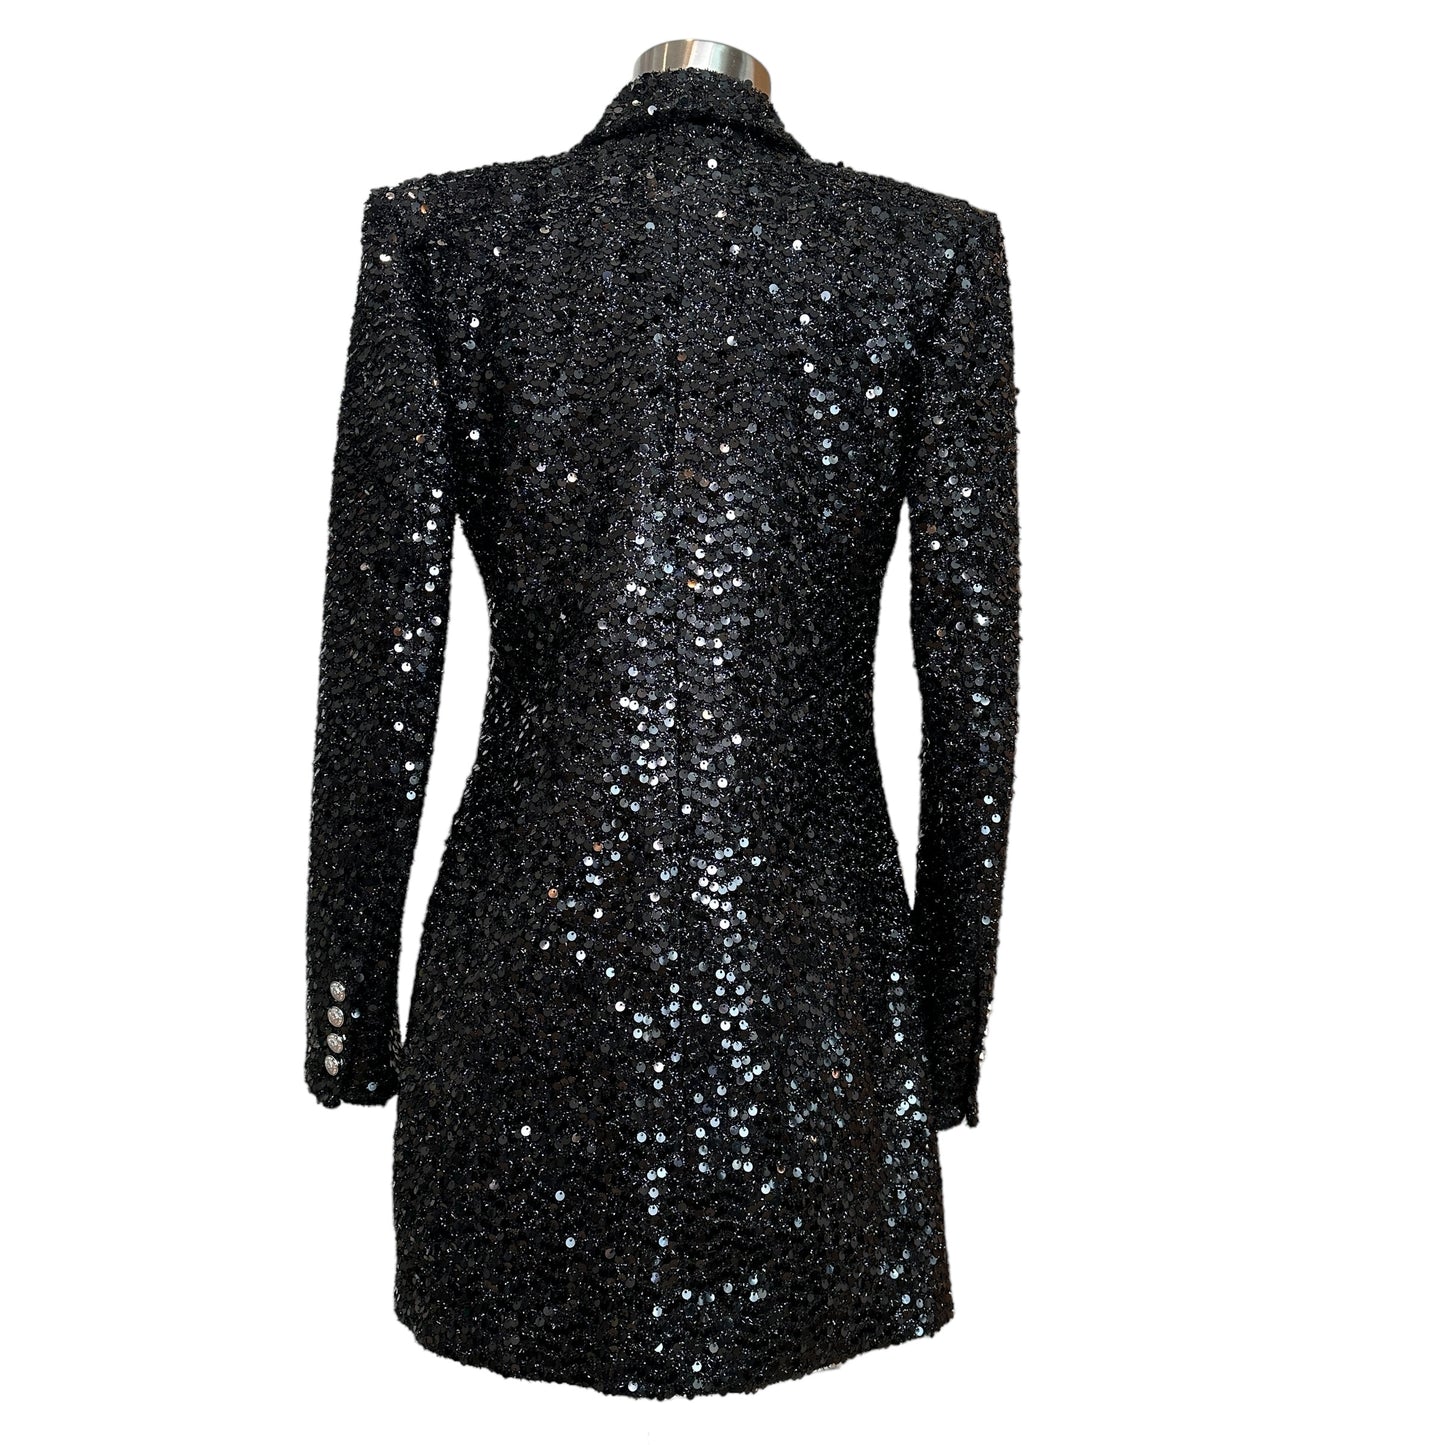 Black Sequins Blazer/Dress - S